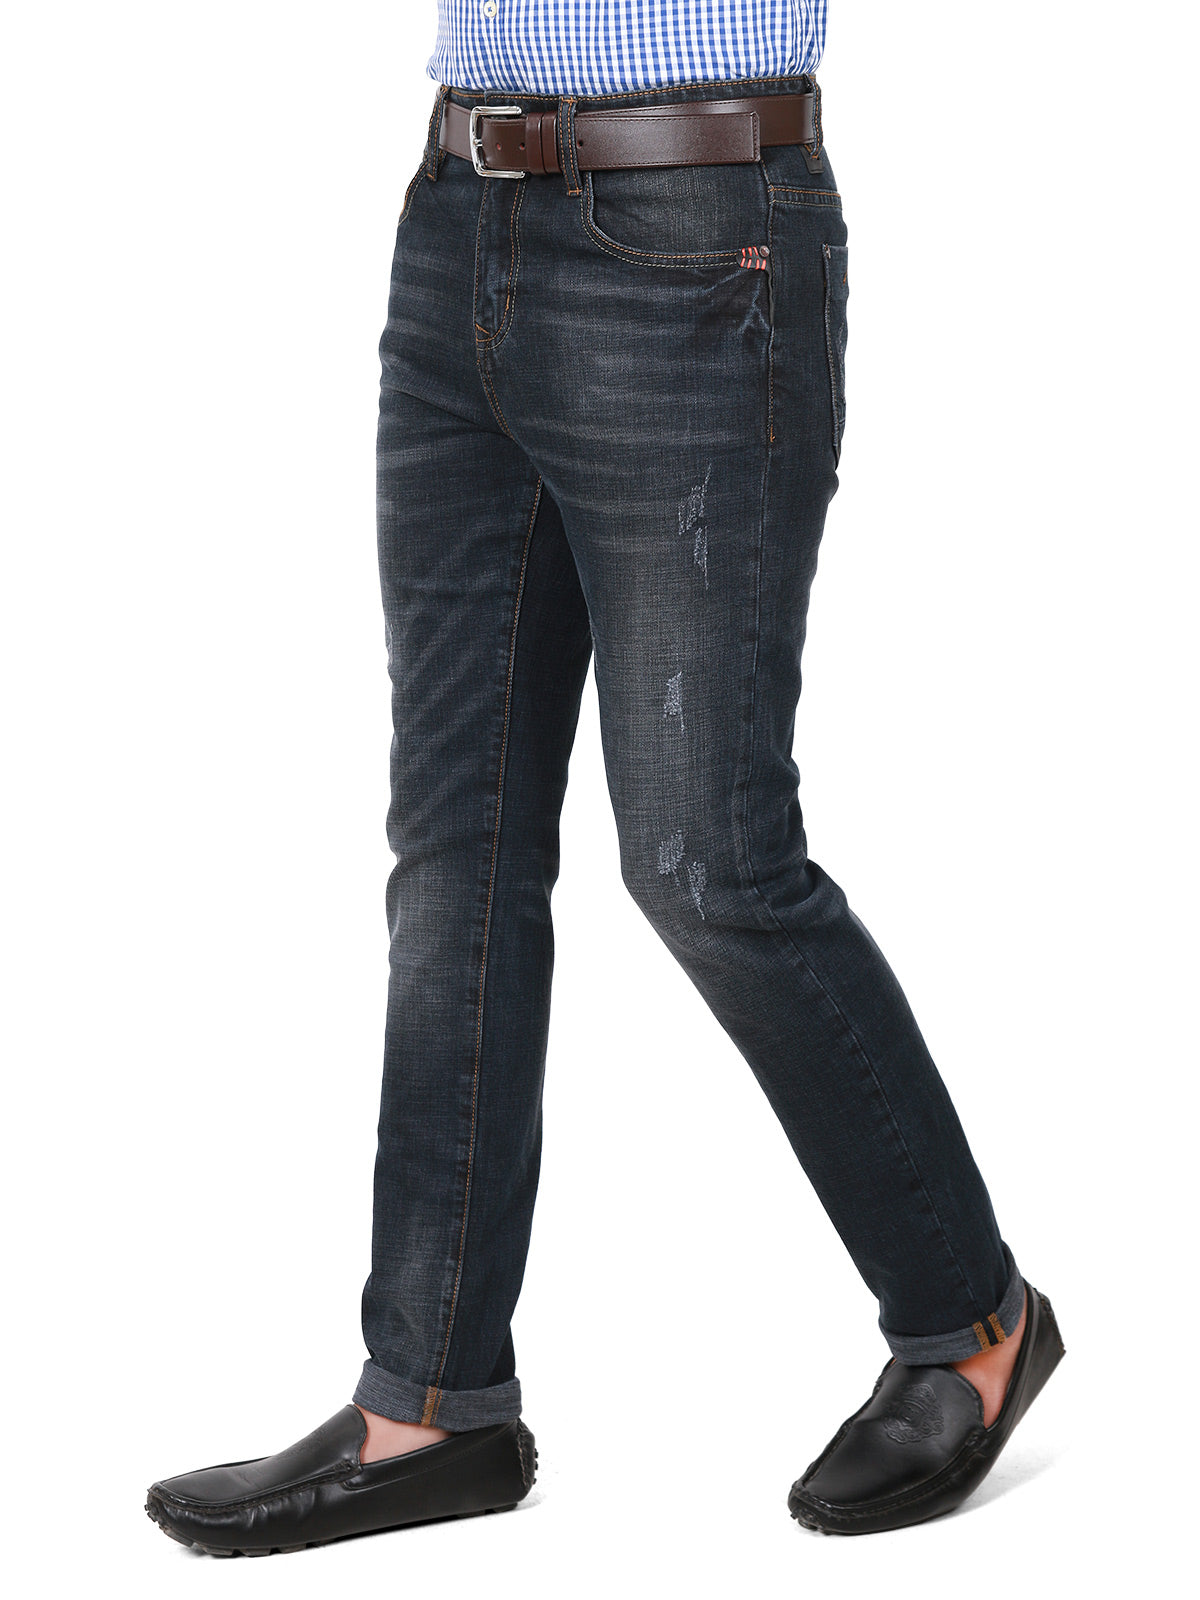 Men's Denim Jeans - F-MBP-D16-32058